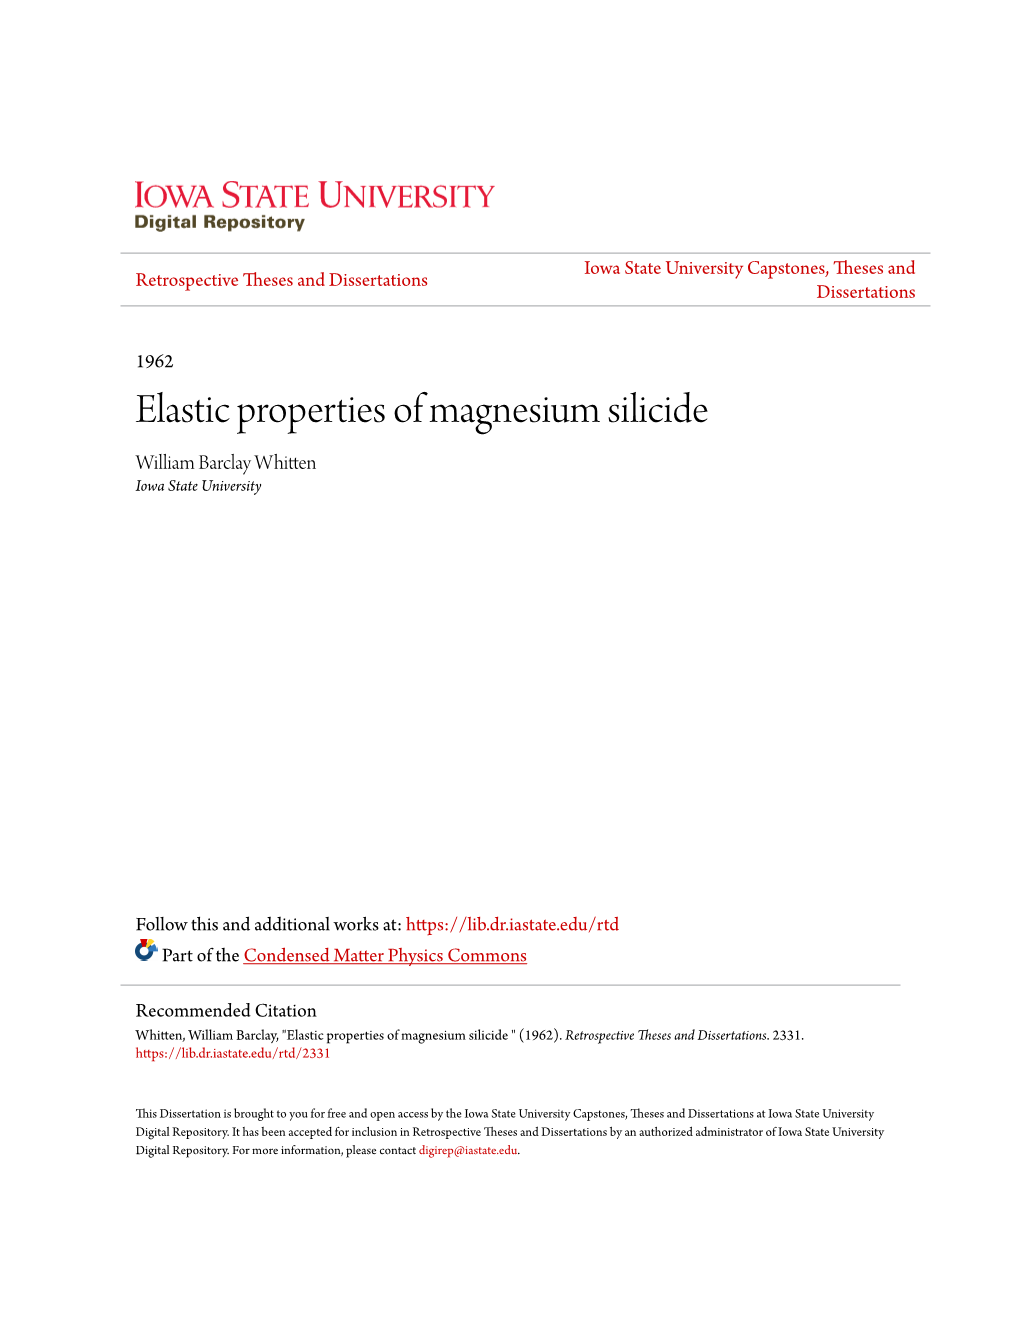 Elastic Properties of Magnesium Silicide William Barclay Whitten Iowa State University